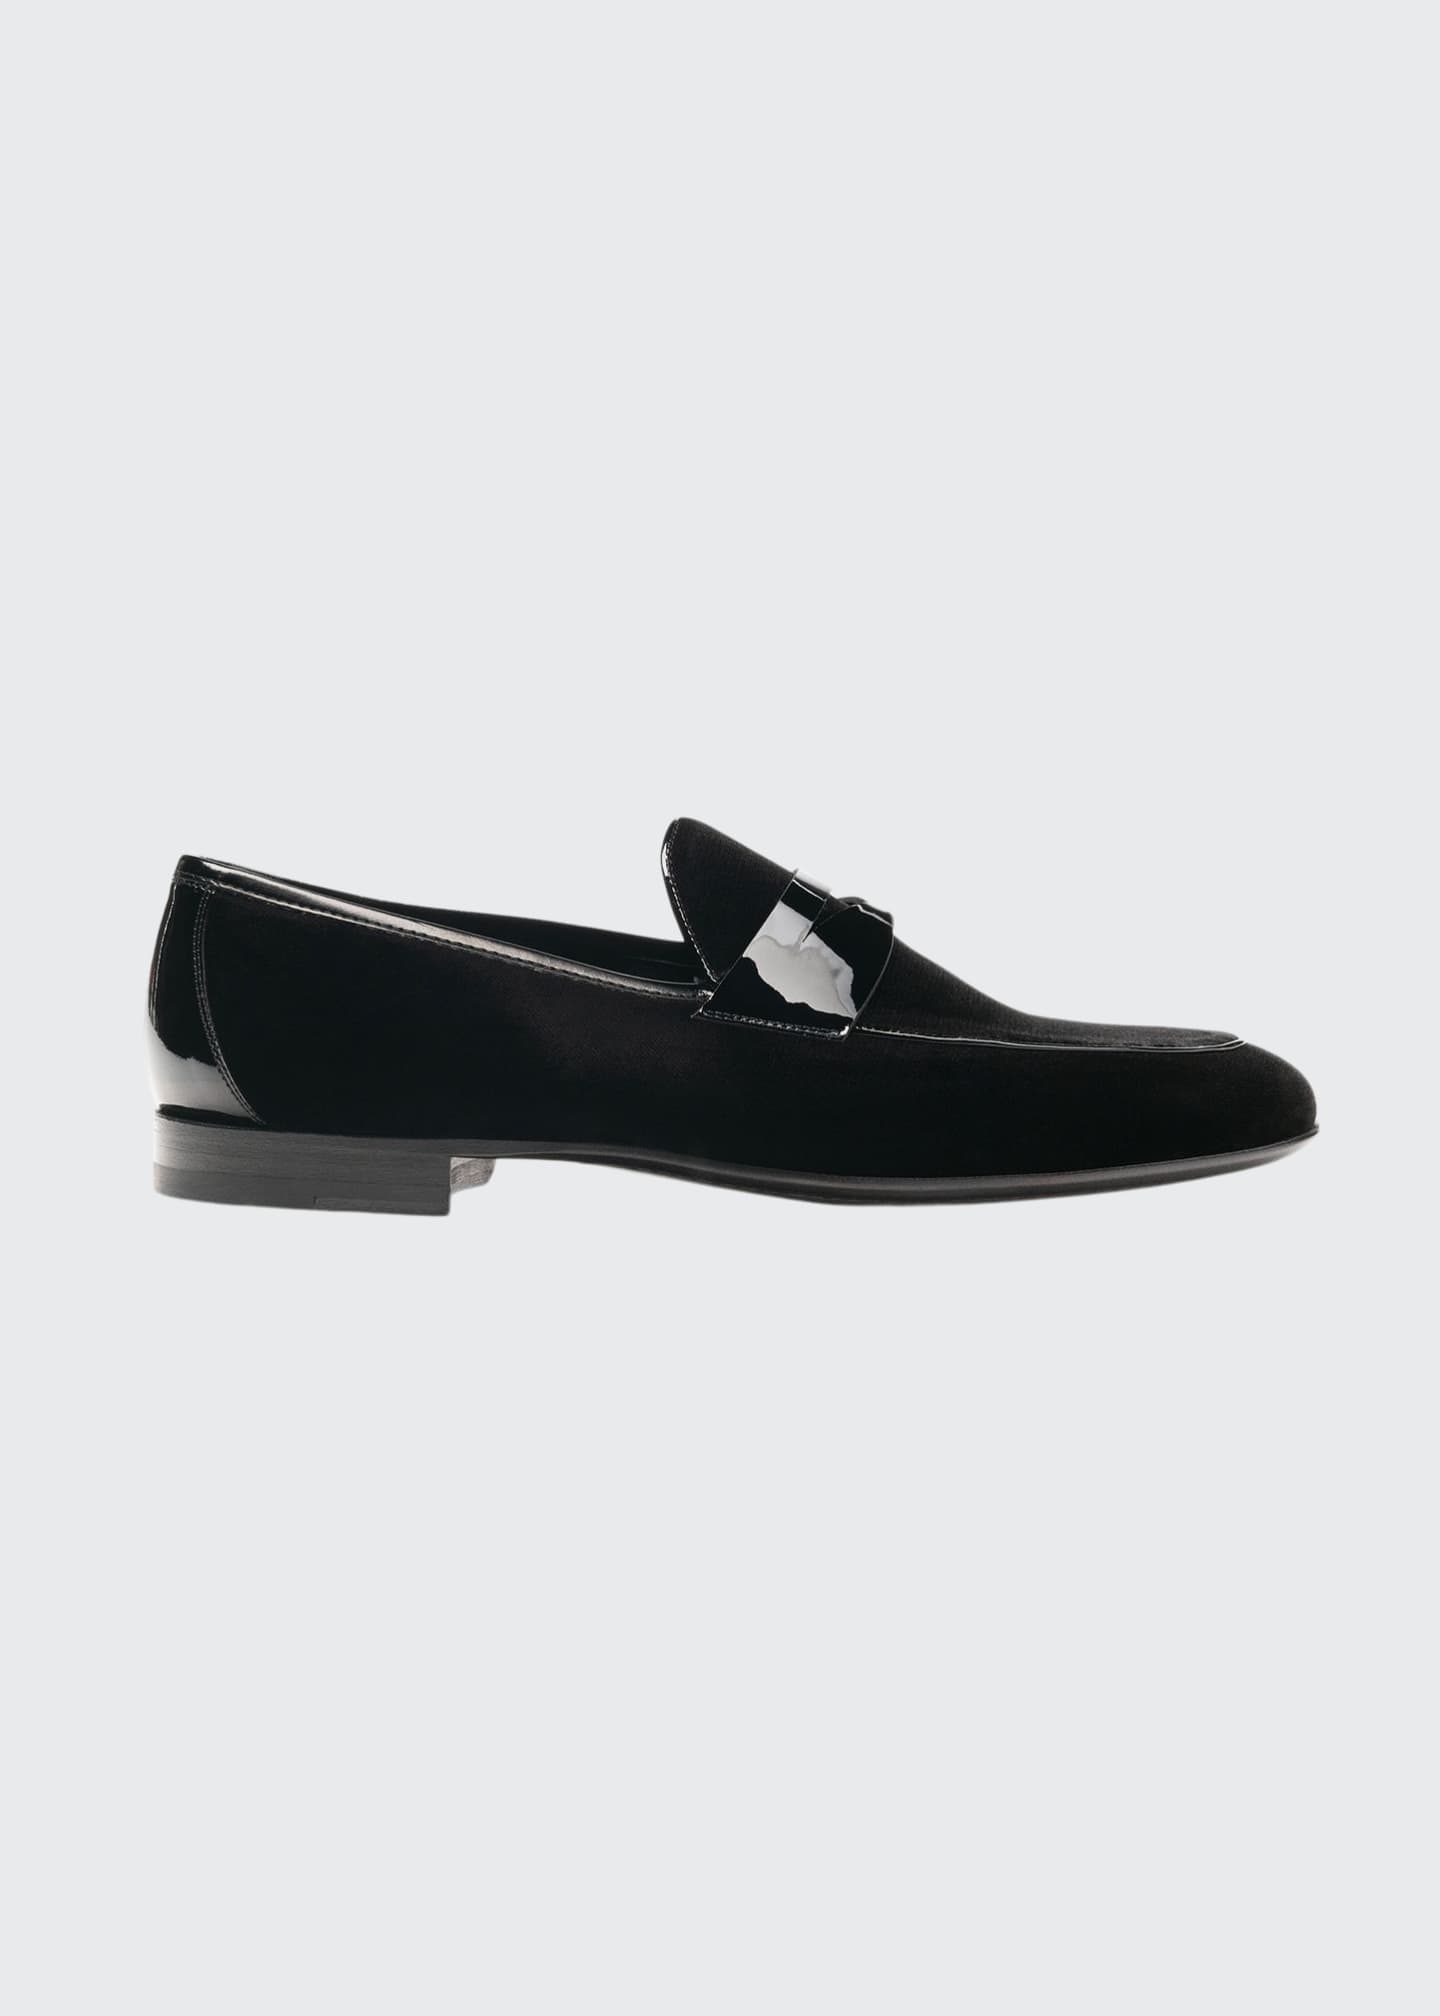 Magnanni Men's Velvet & Patent Leather Loafers - Bergdorf Goodman